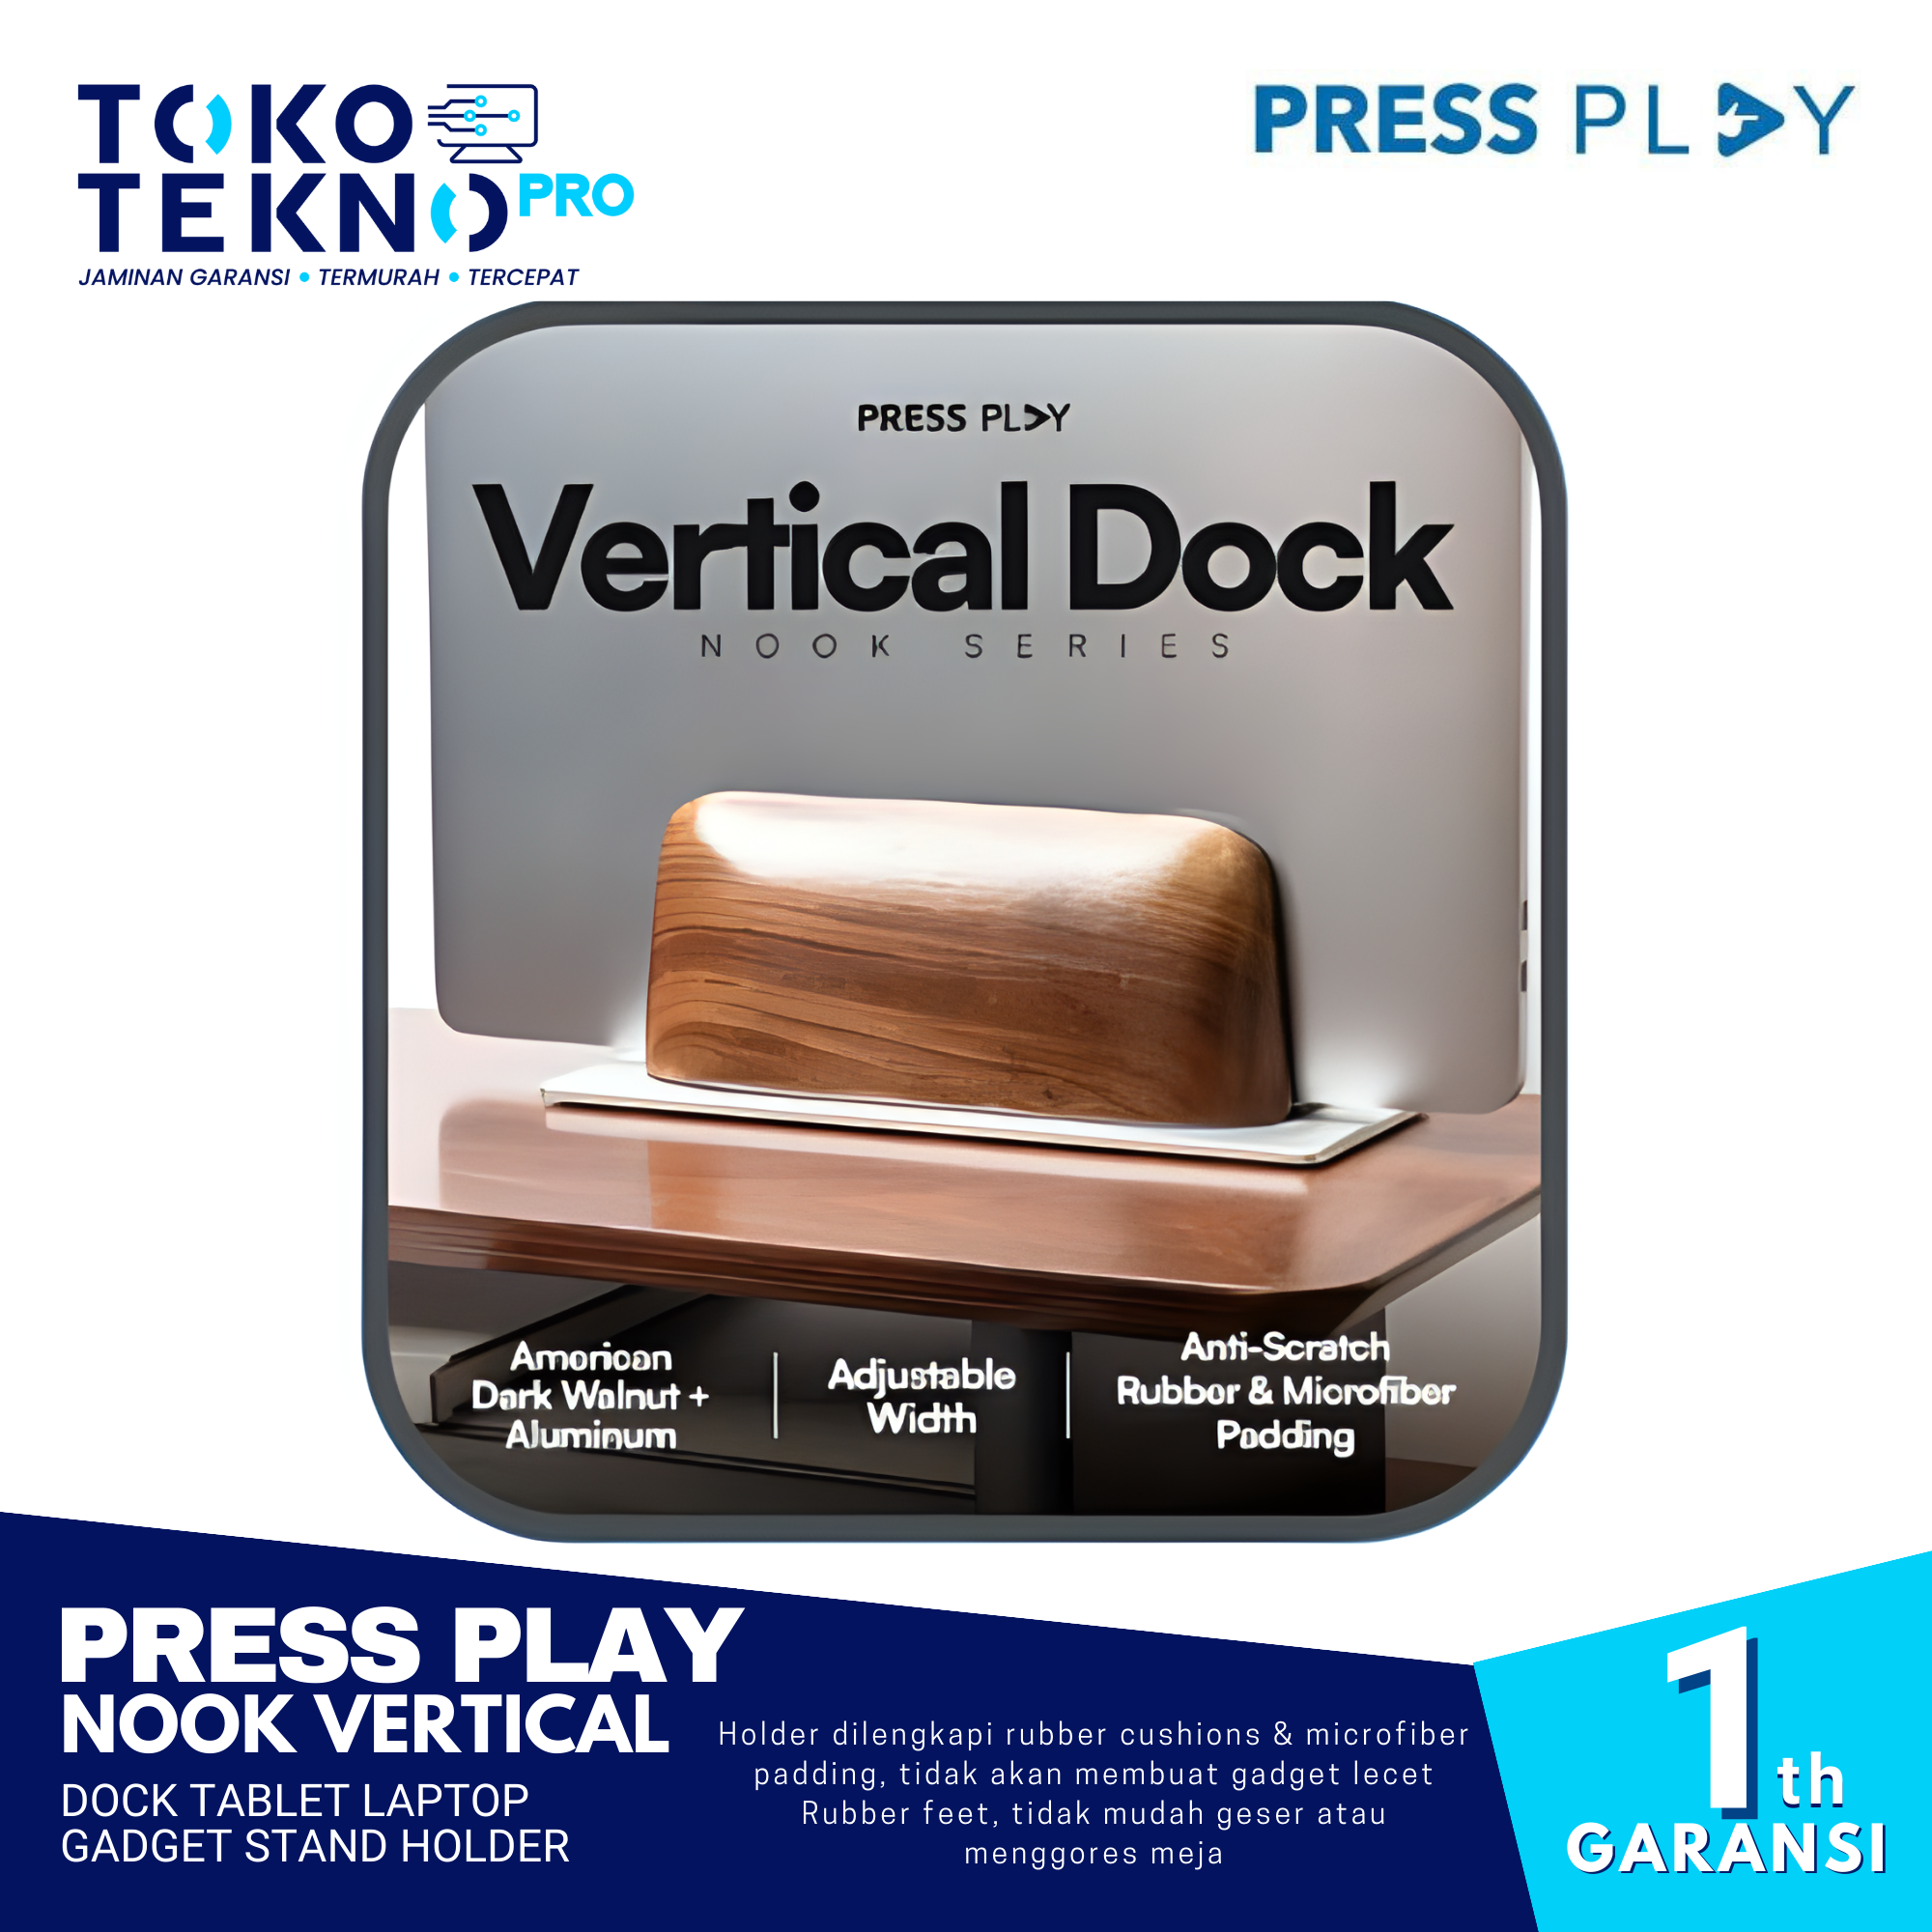 Press Play Nook Vertical Dock Tablet Laptop Gadget Stand Holder